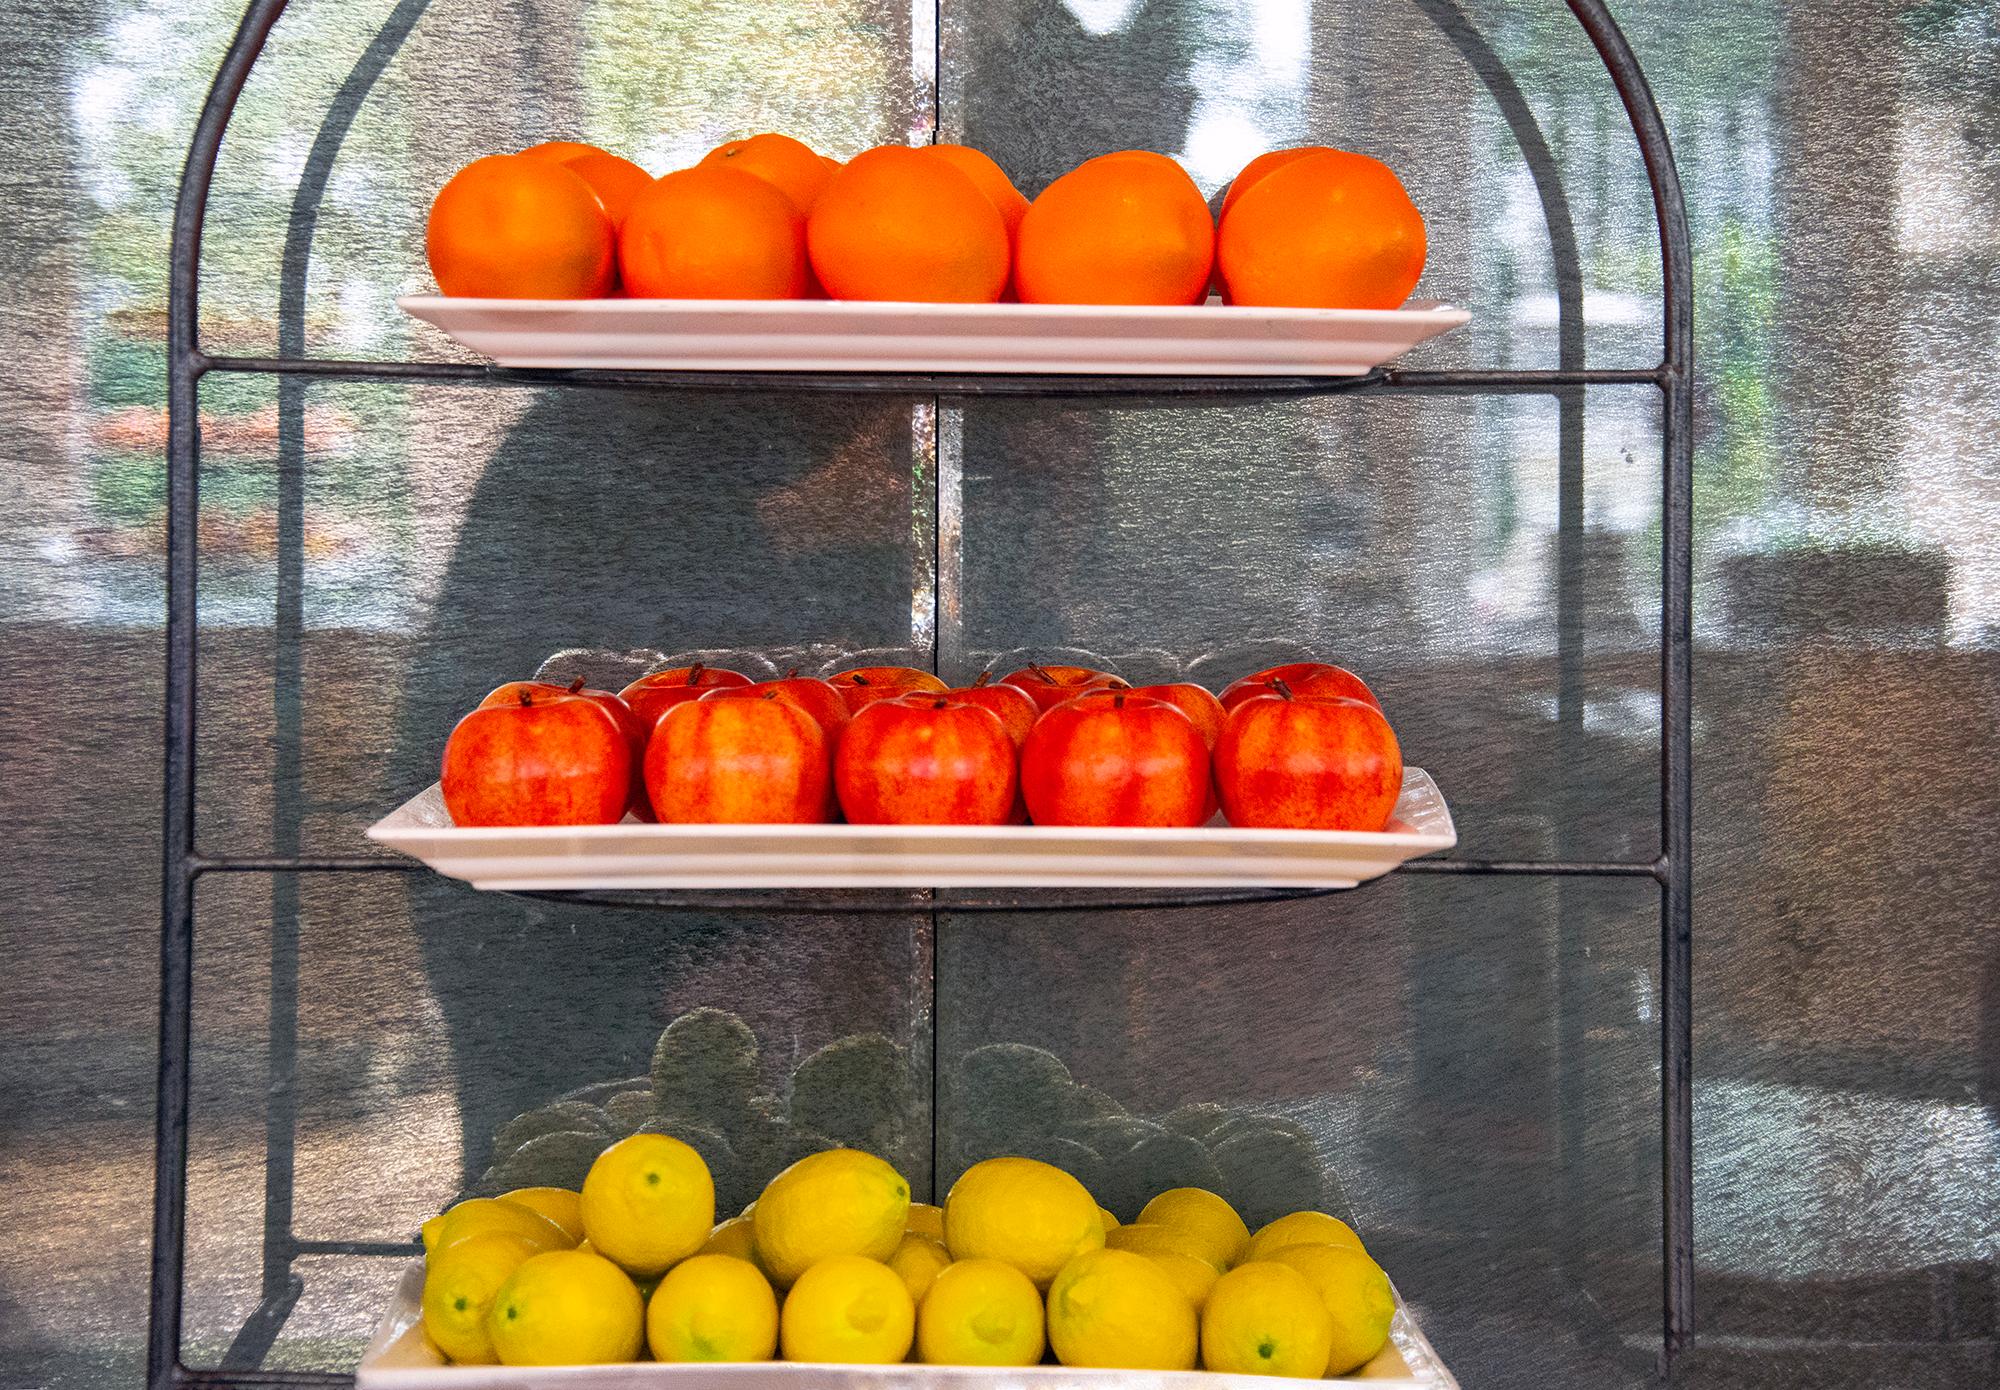 Robert Funk Still-Life Photograph - Oranges Apples and Lemons,  Stacked Fruit